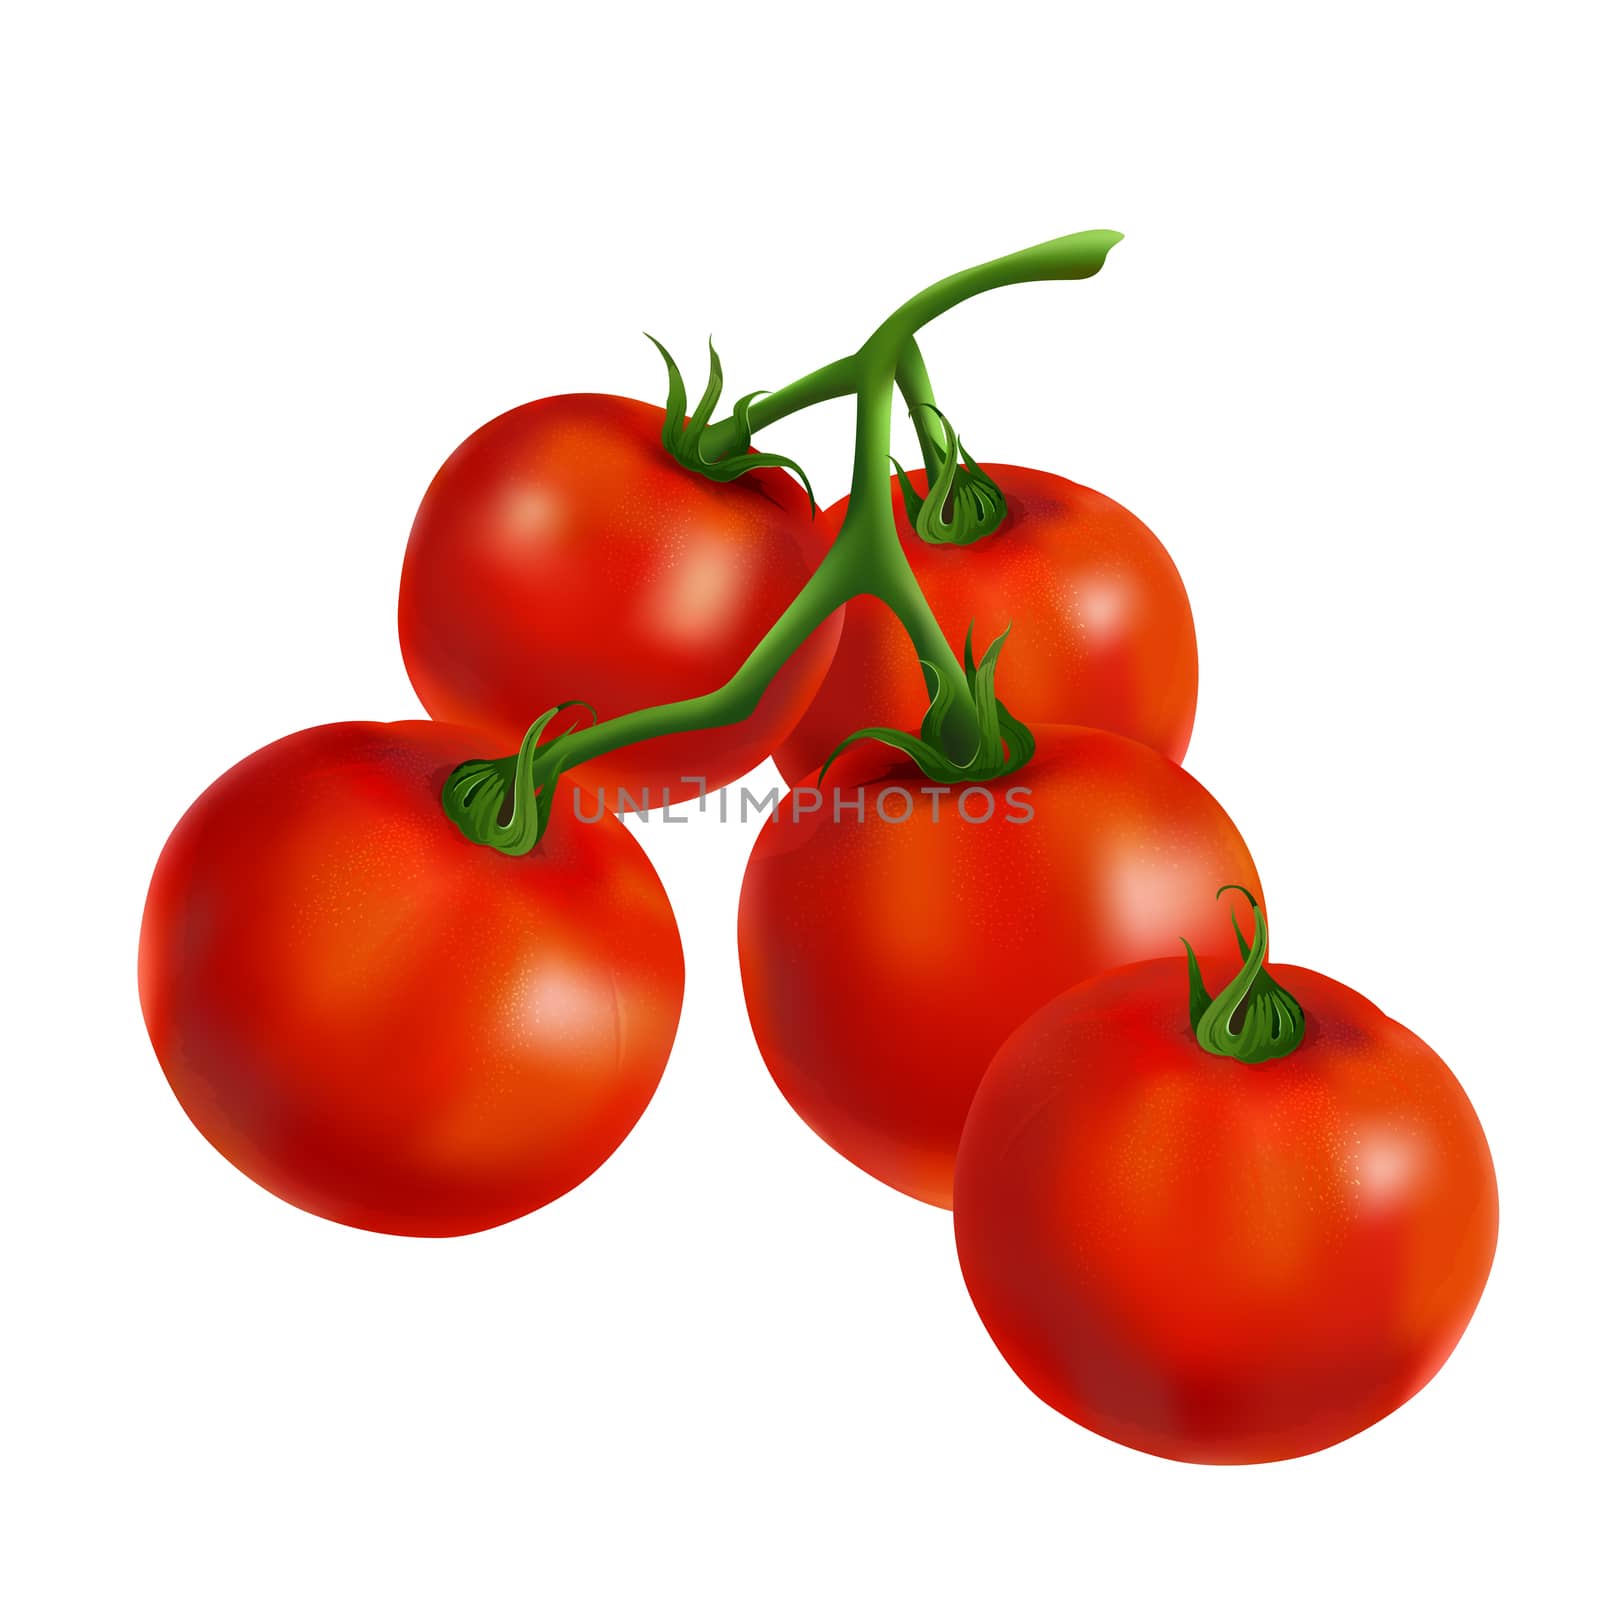 Cherry tomatoes. Isolated illustration on white background.